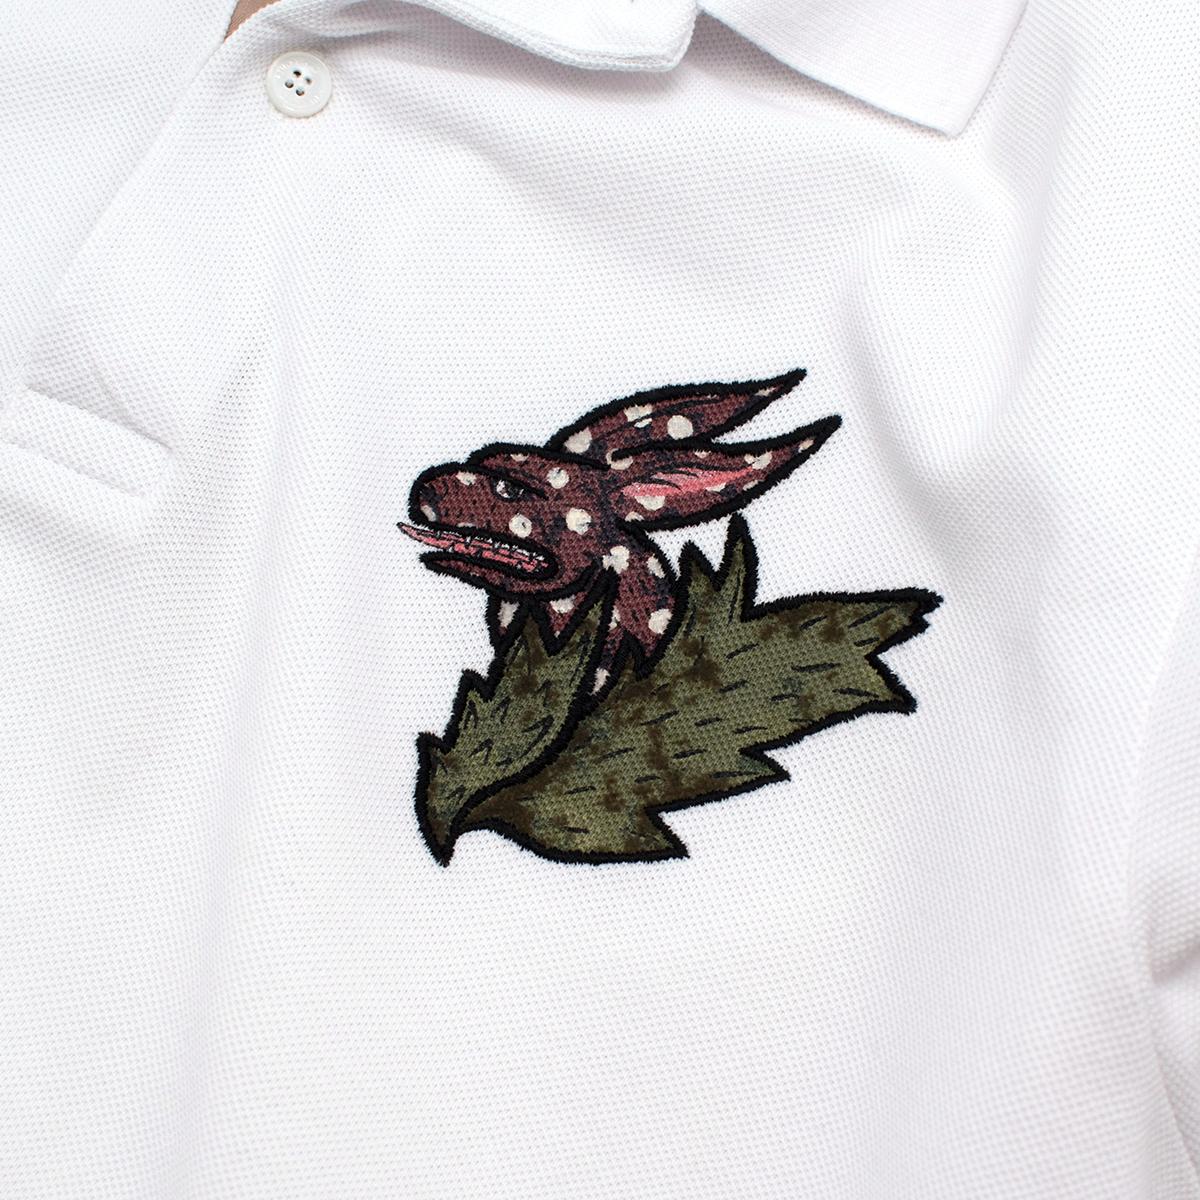 Burberry White Cotton Pique Polo Shirt with Dragon Applique - US M For Sale 1